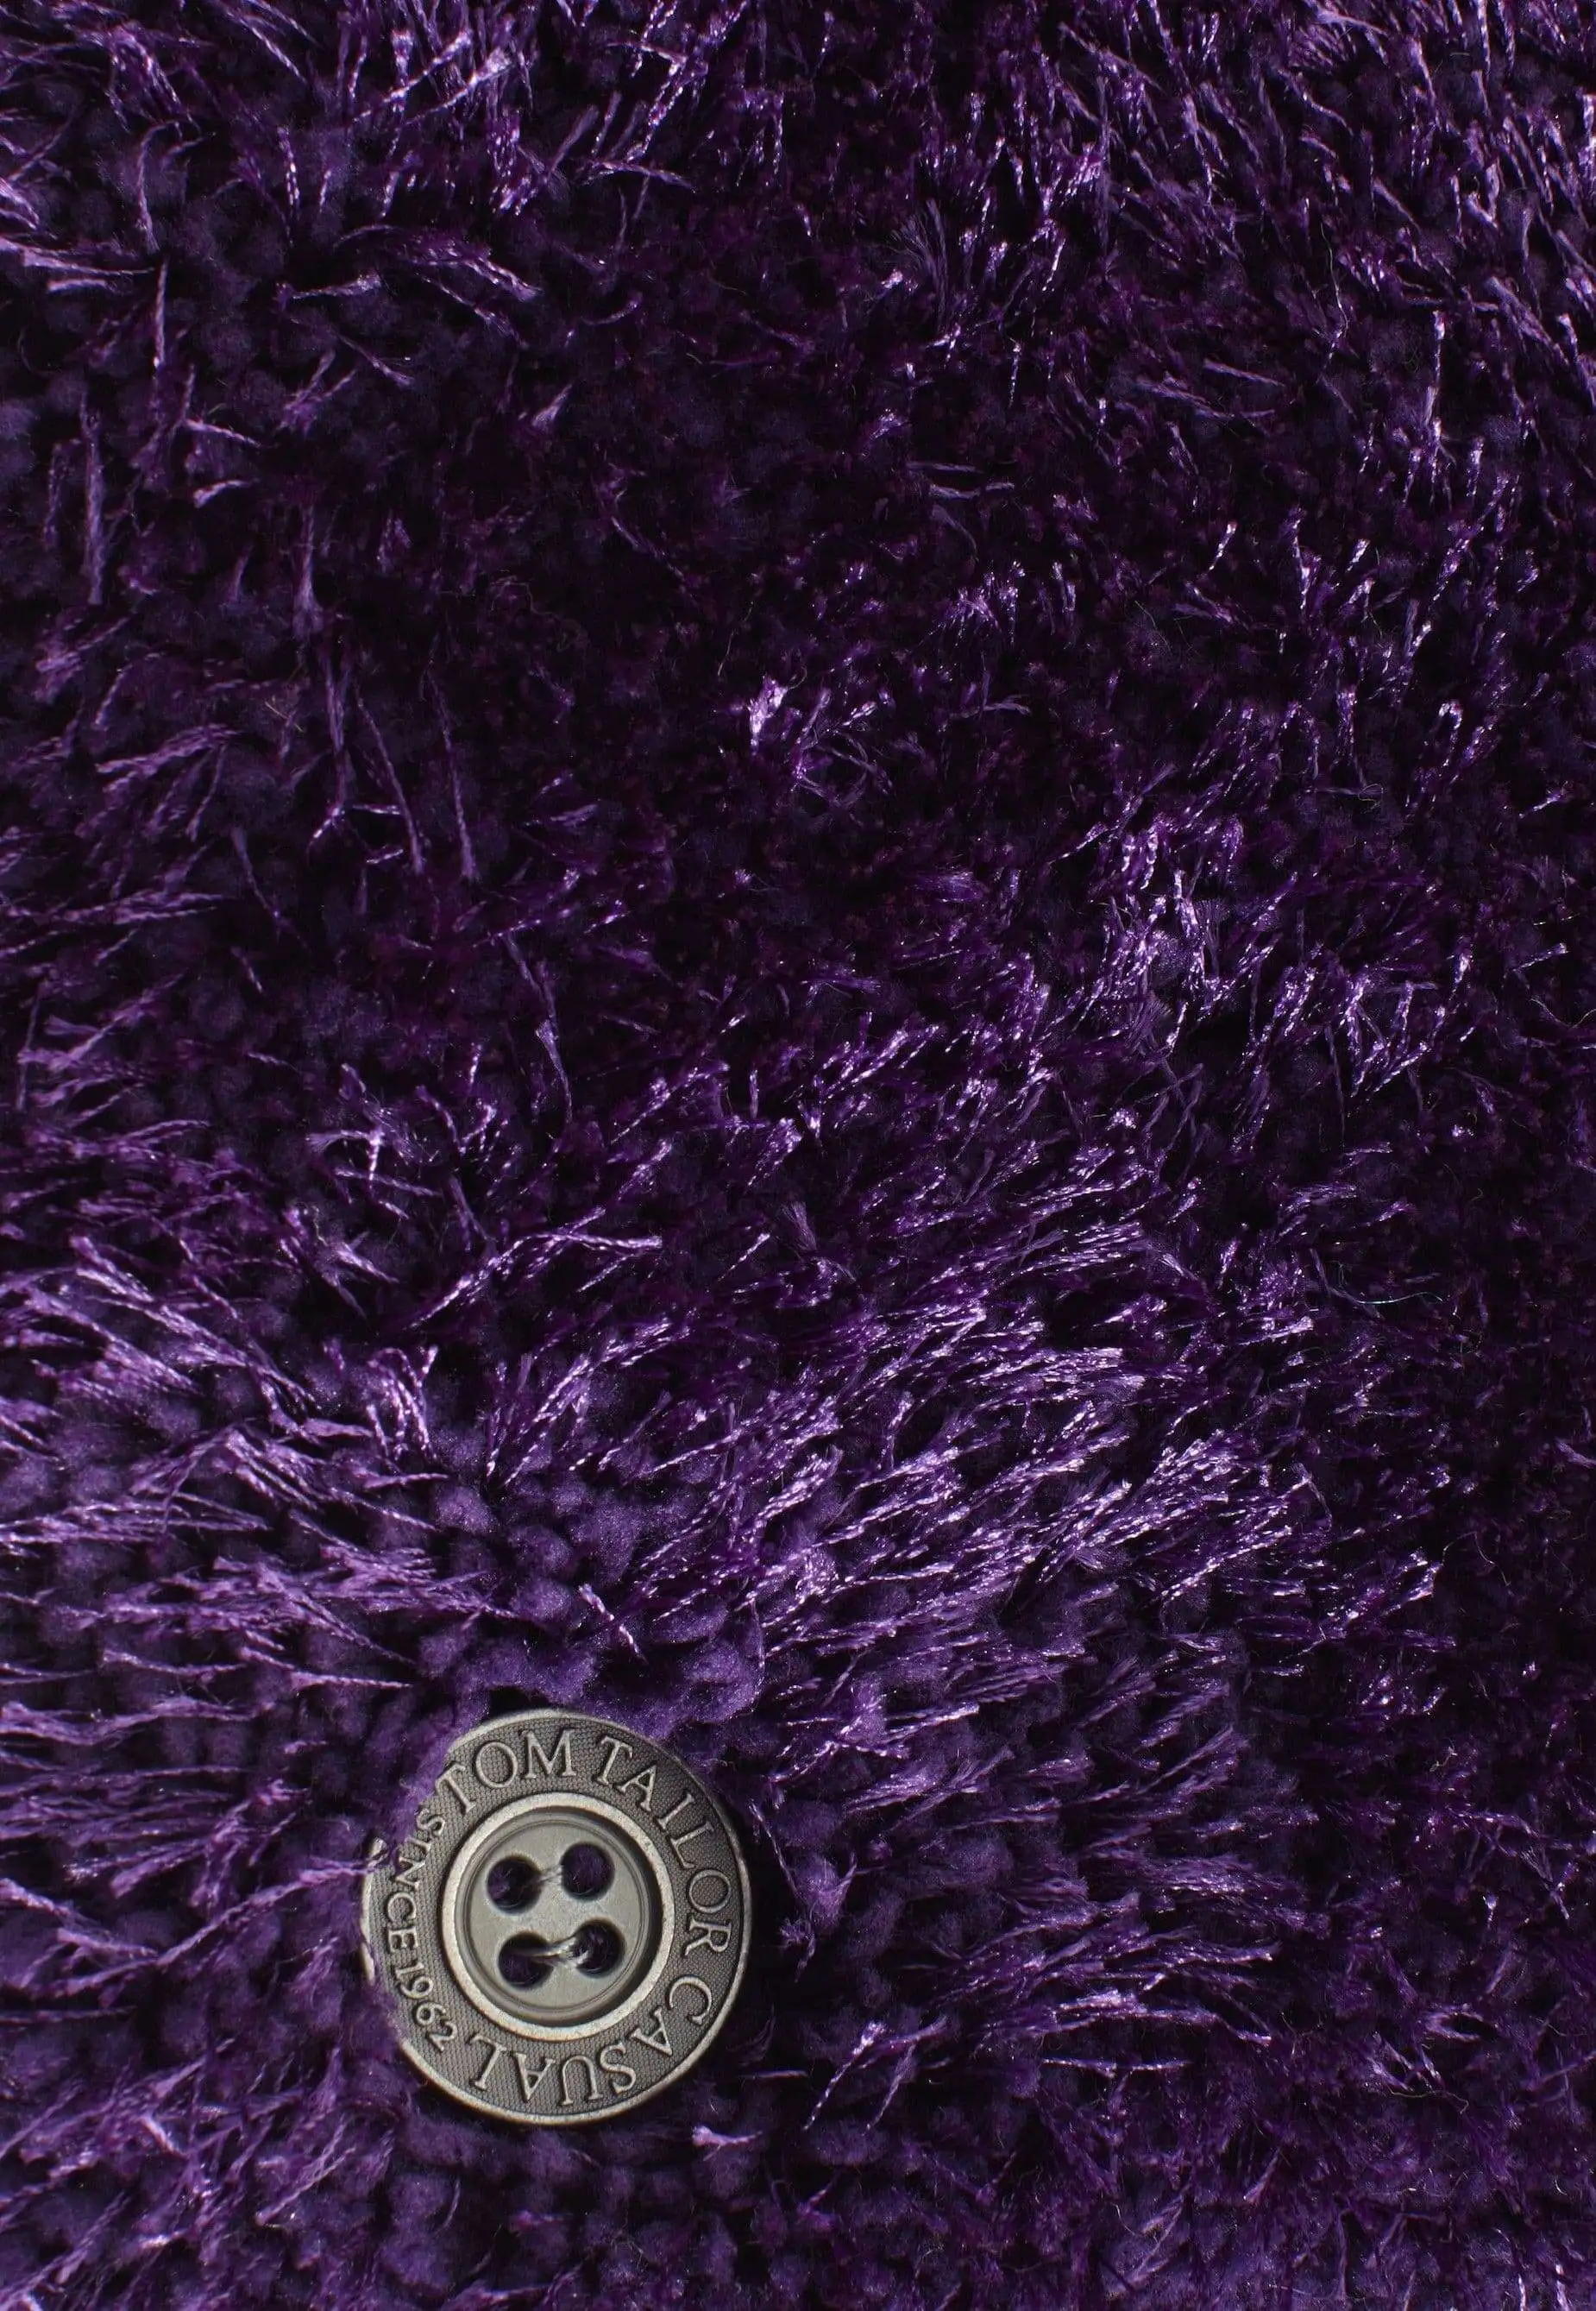 Soft uni purple Kuschelteppich Teppich Uni